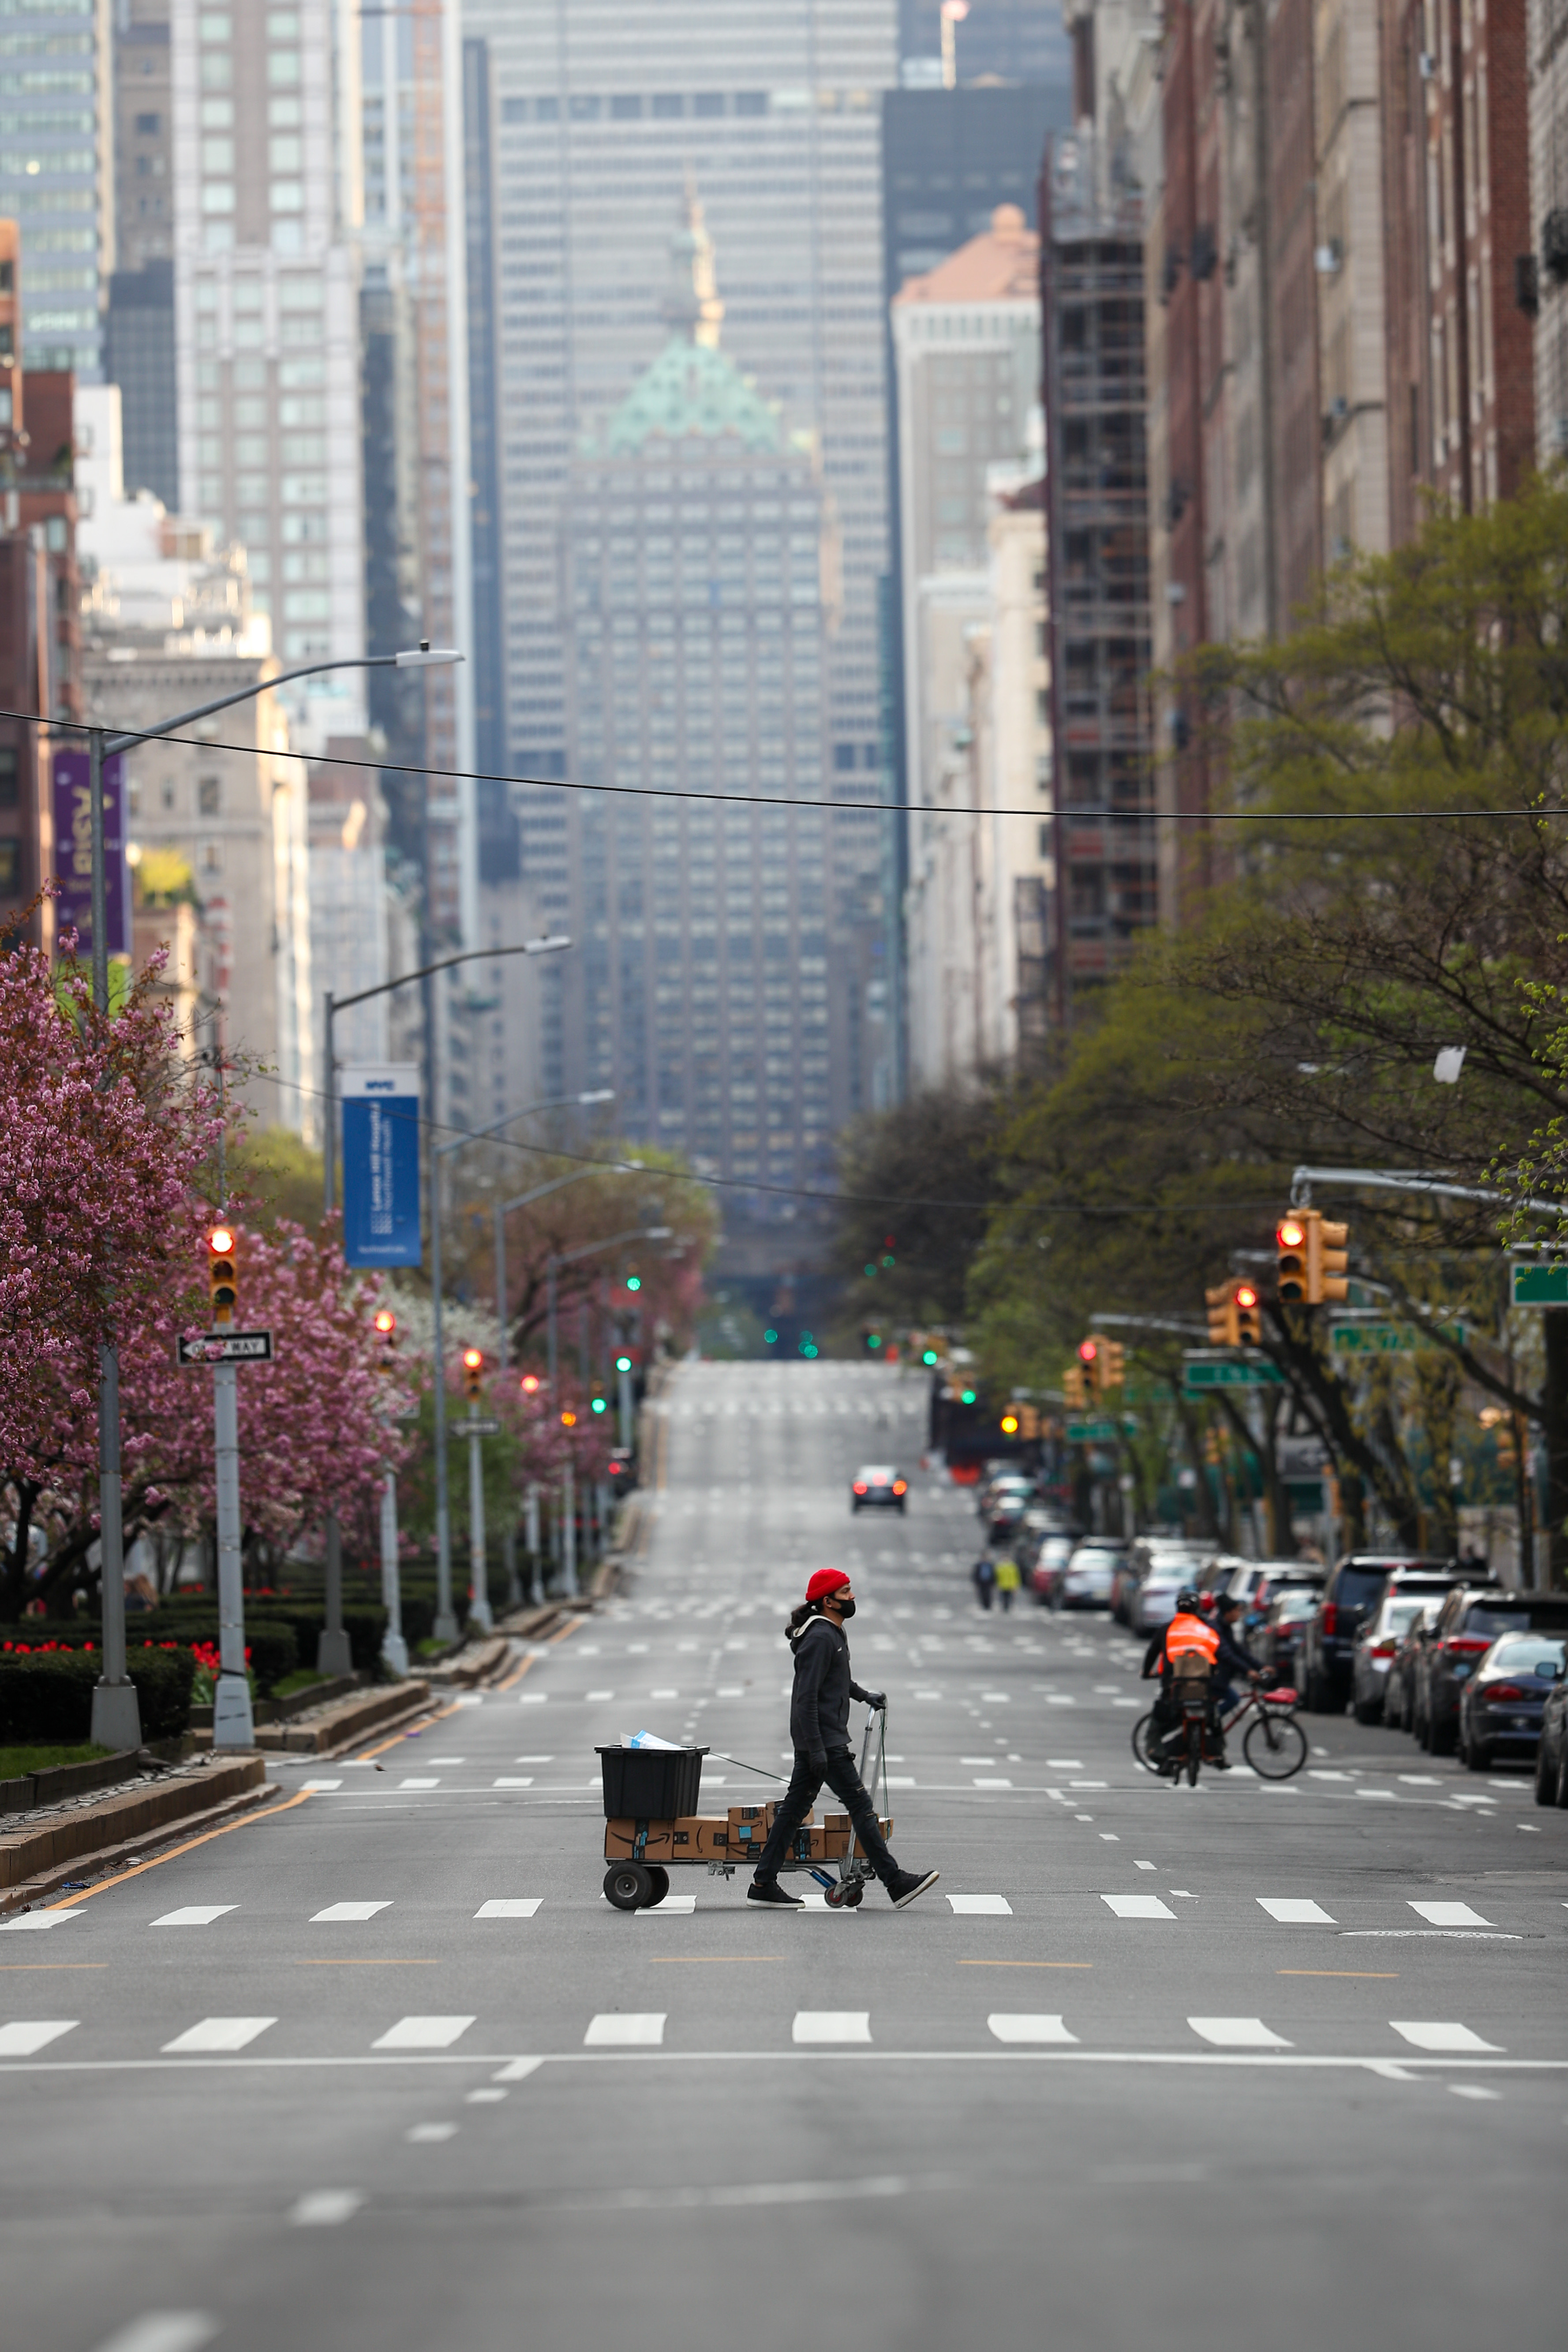 Streets in New York City remain nearly deserted due to coronavirus